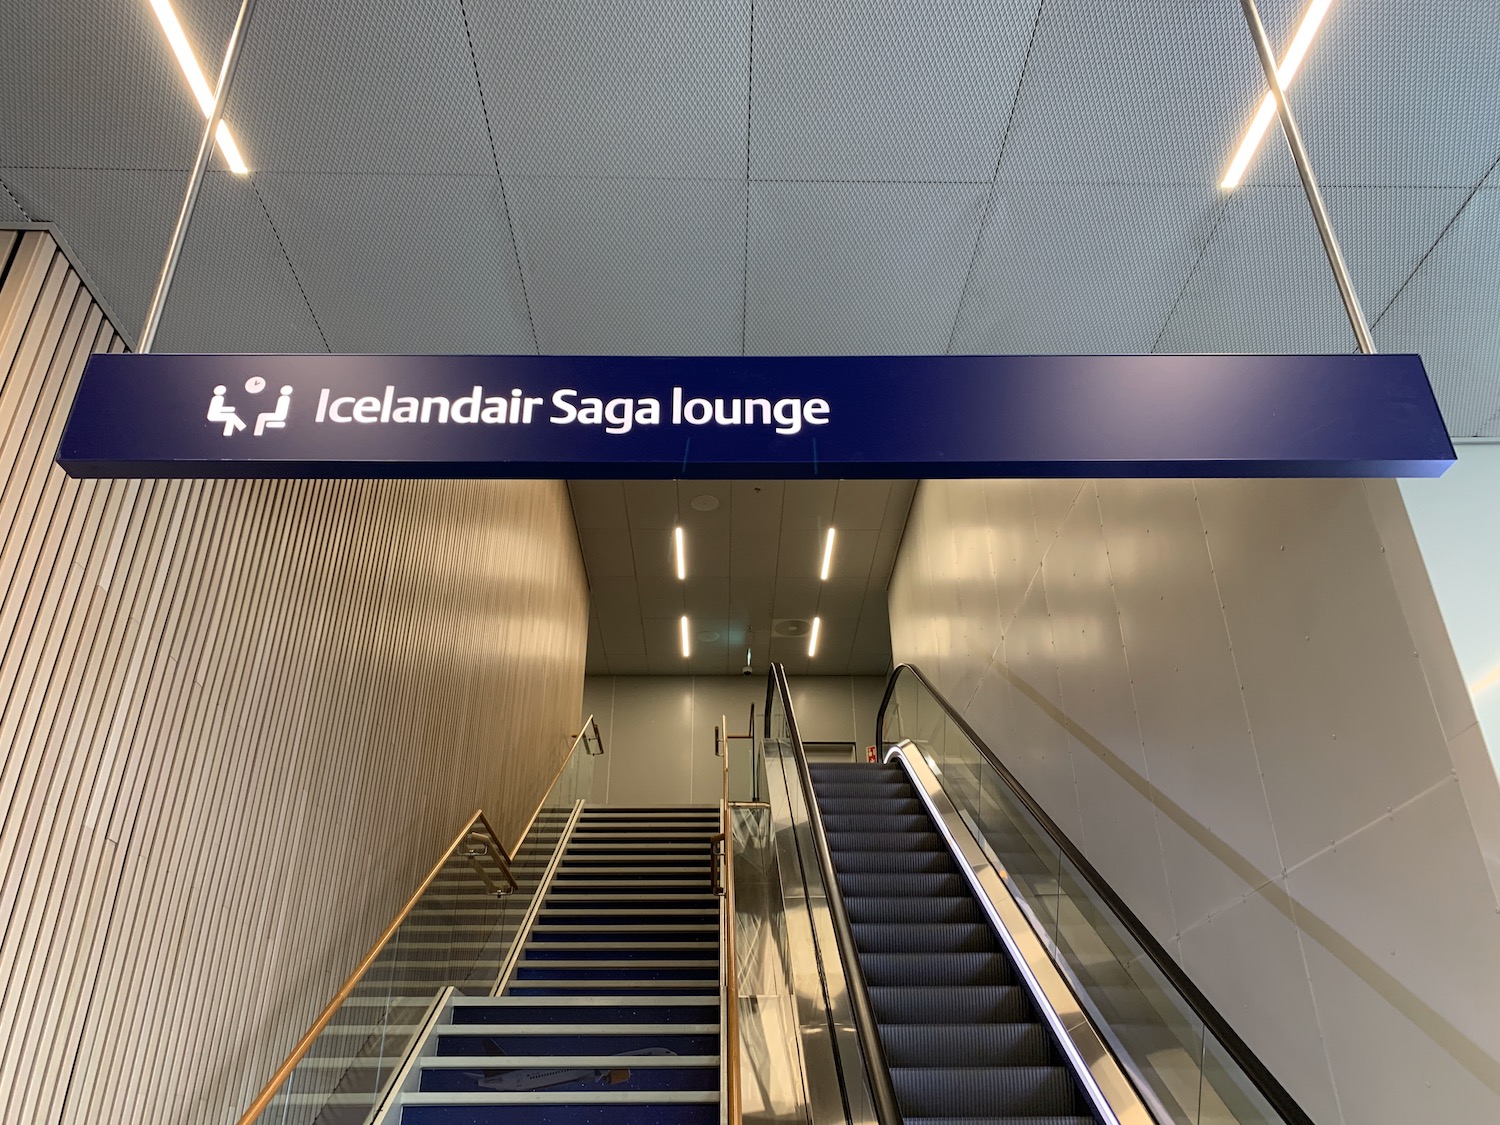 a escalator and a sign